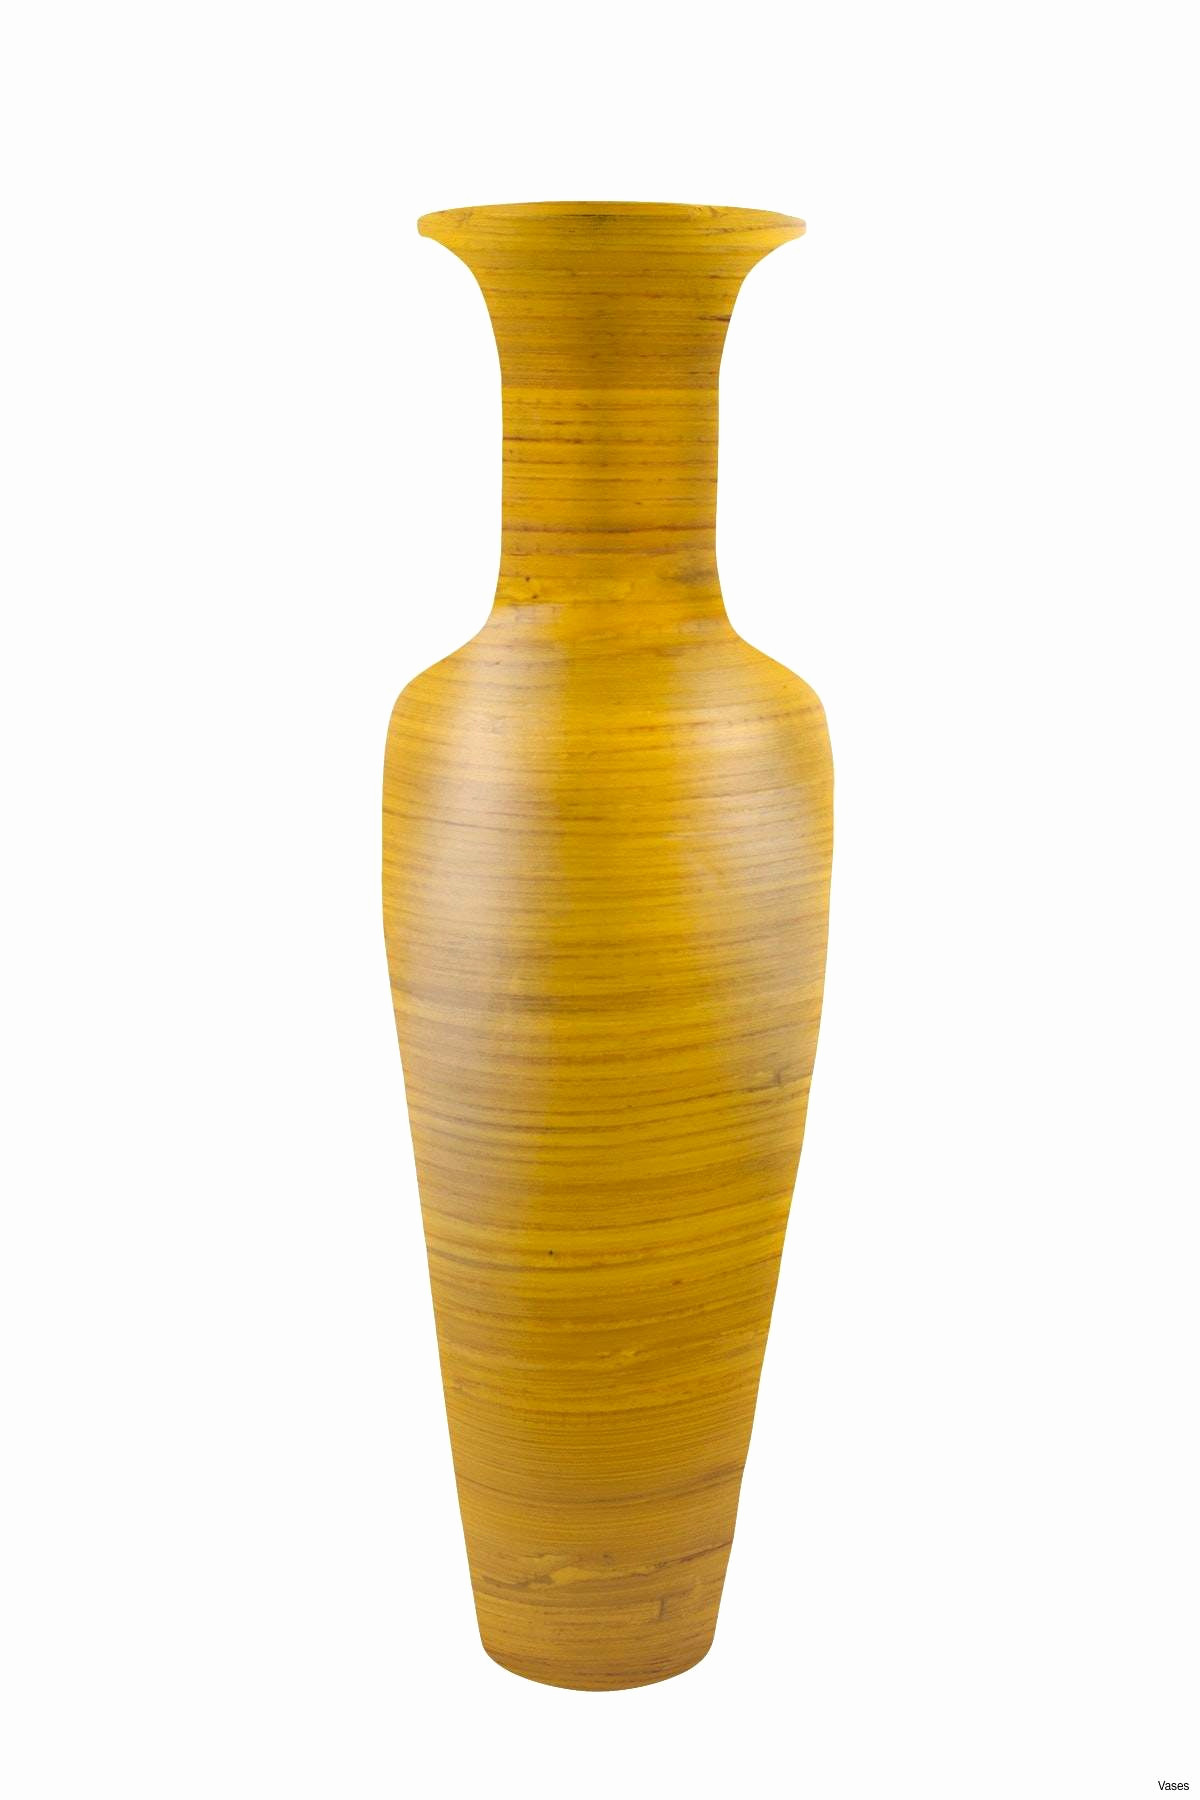 27 Wonderful Clay Floor Vase 2024 free download clay floor vase of vase set of 3 collection 25 new floor vase set 3 vases with regard to 25 new floor vase set 3